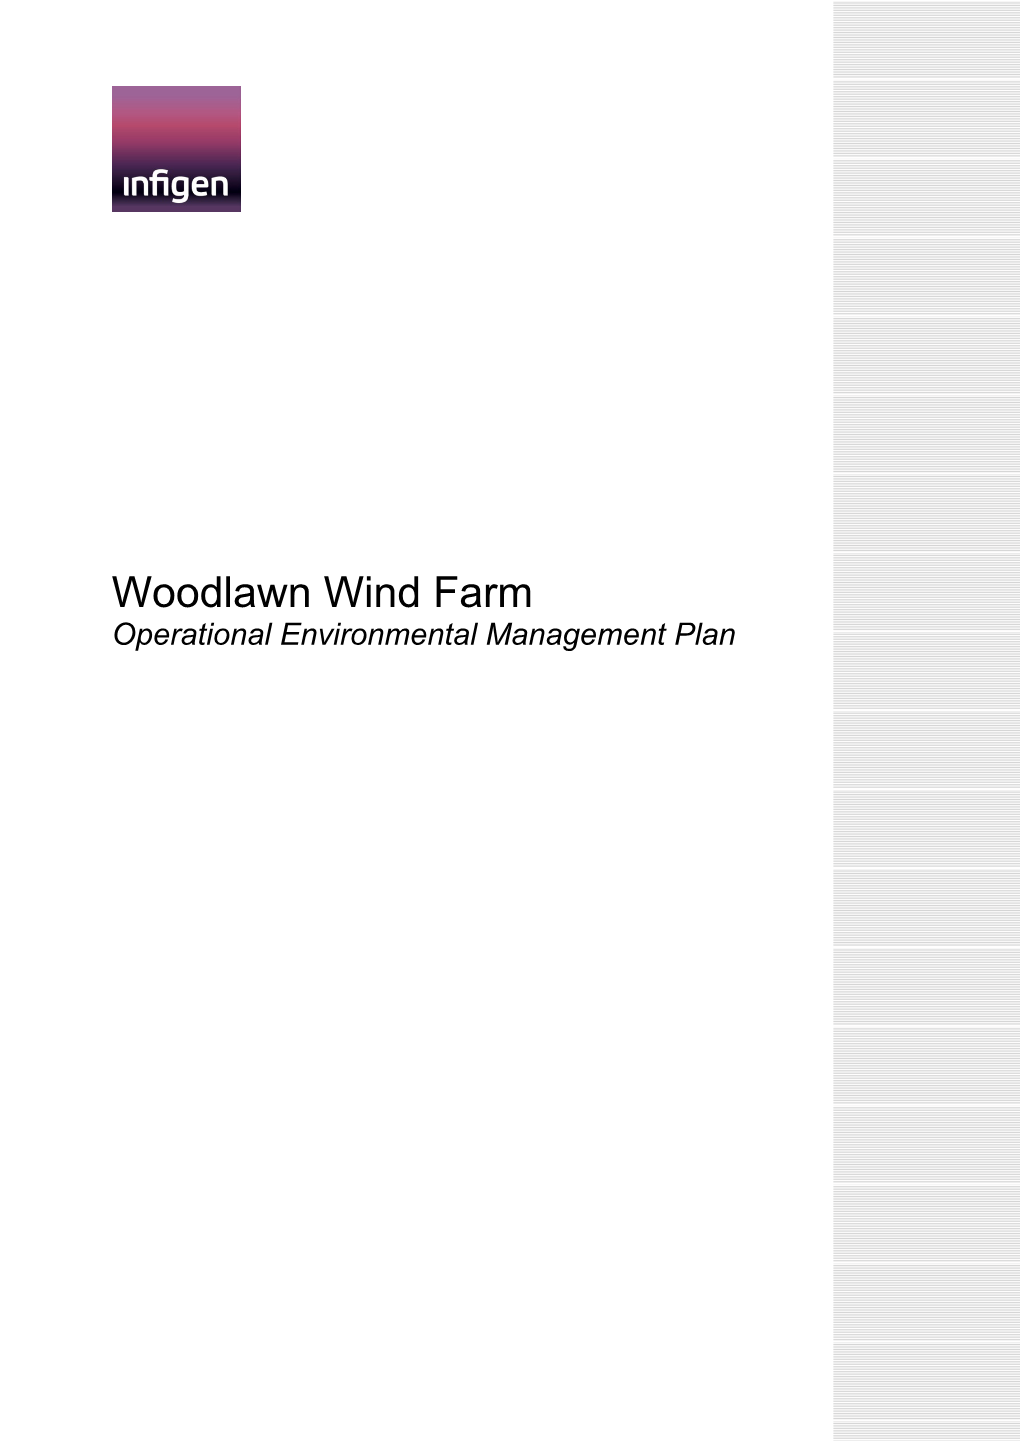 Woodlawn Wind Farm Operational Environmental Management Plan